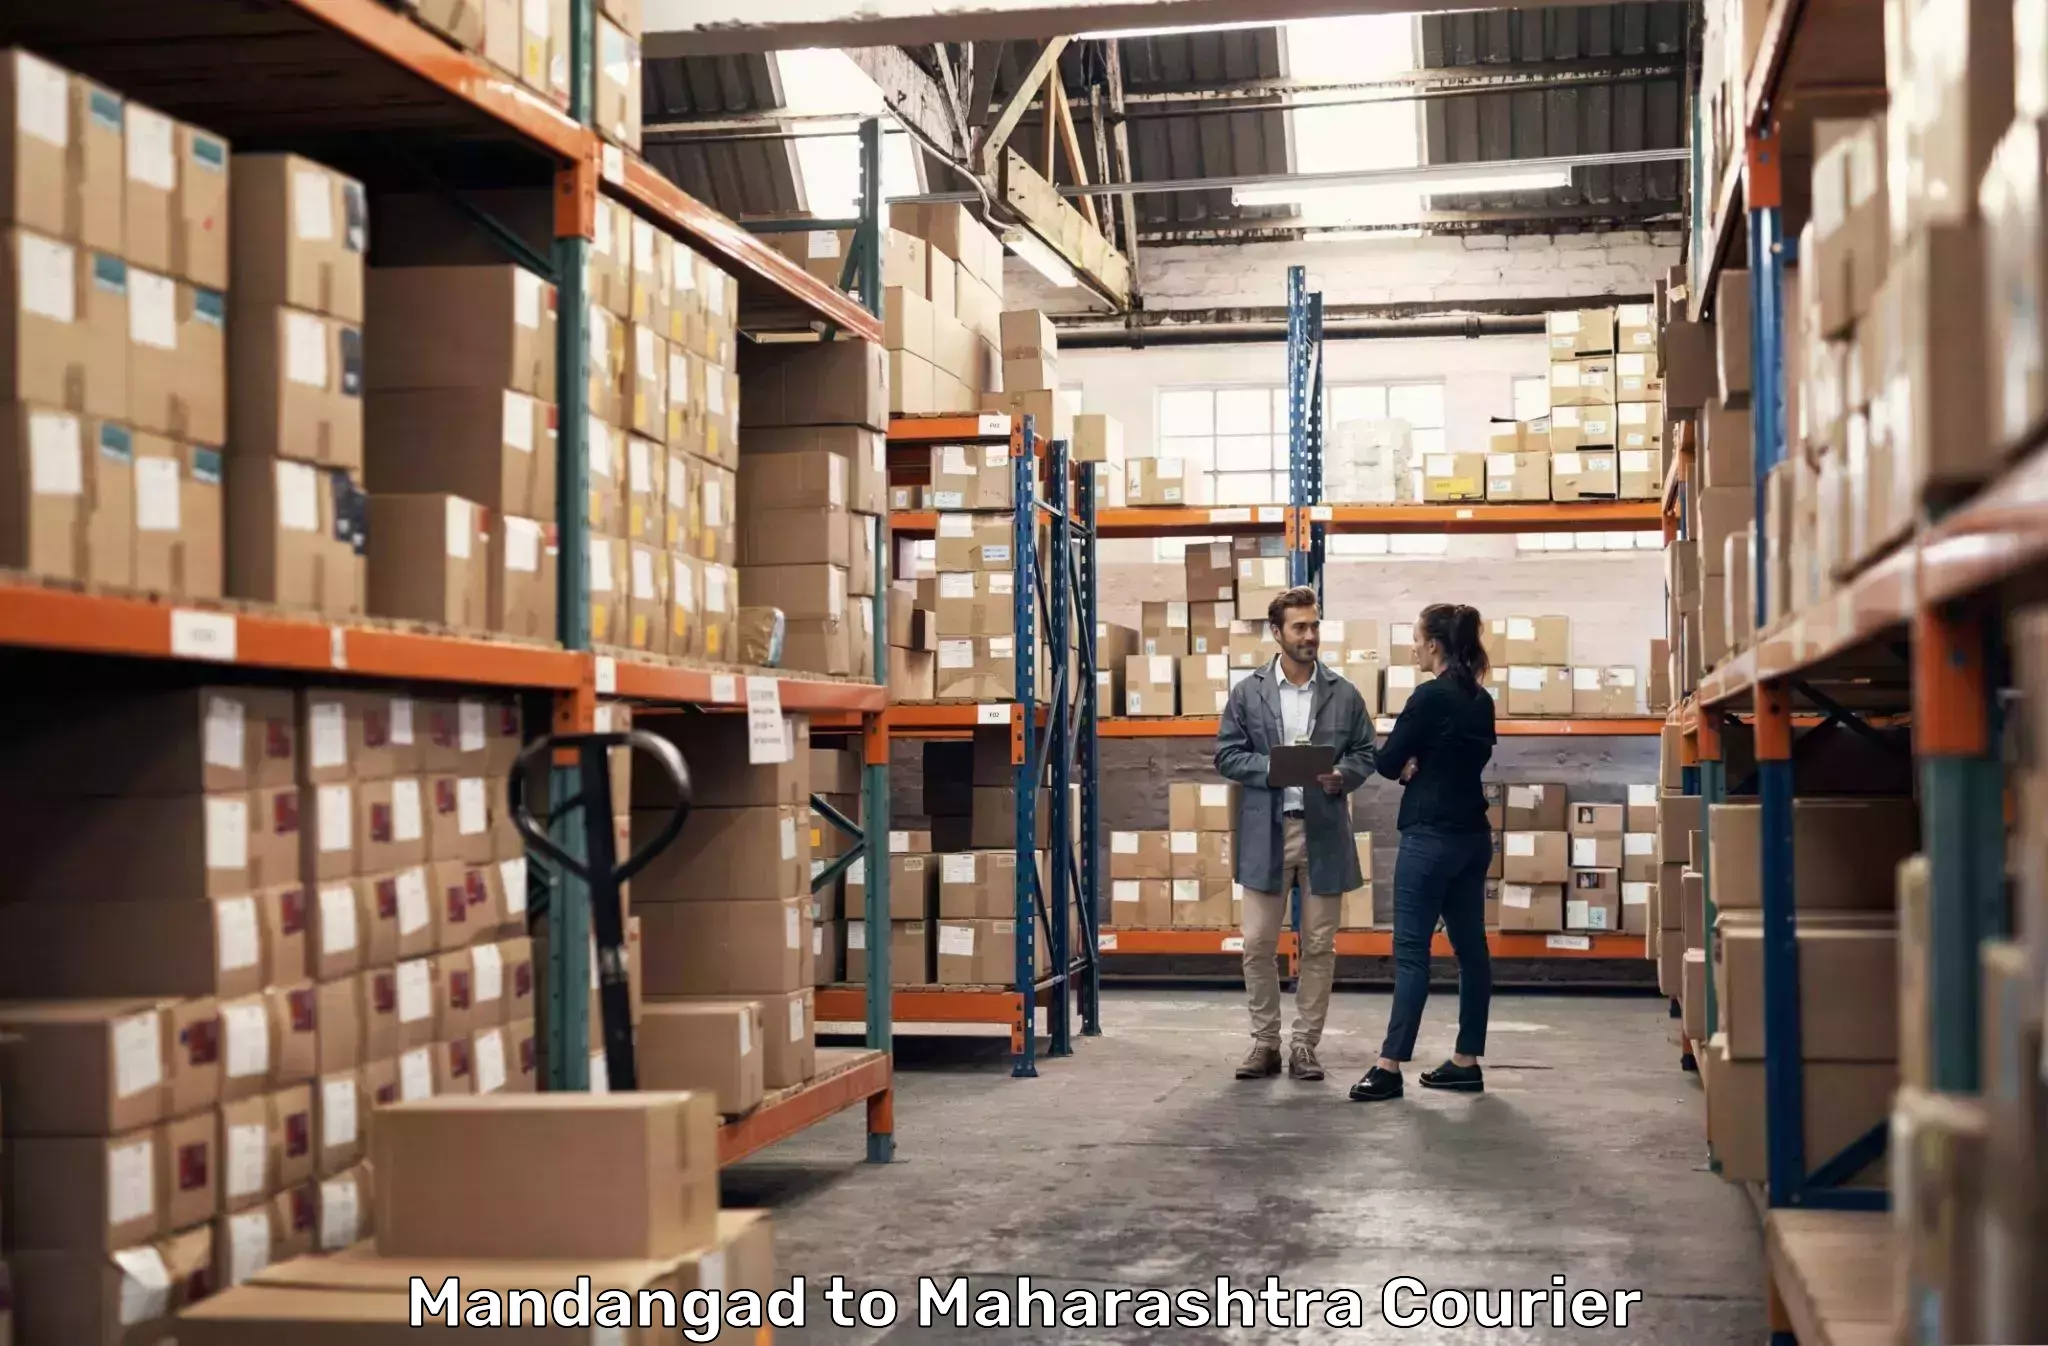 Professional courier handling Mandangad to Mumbai Port